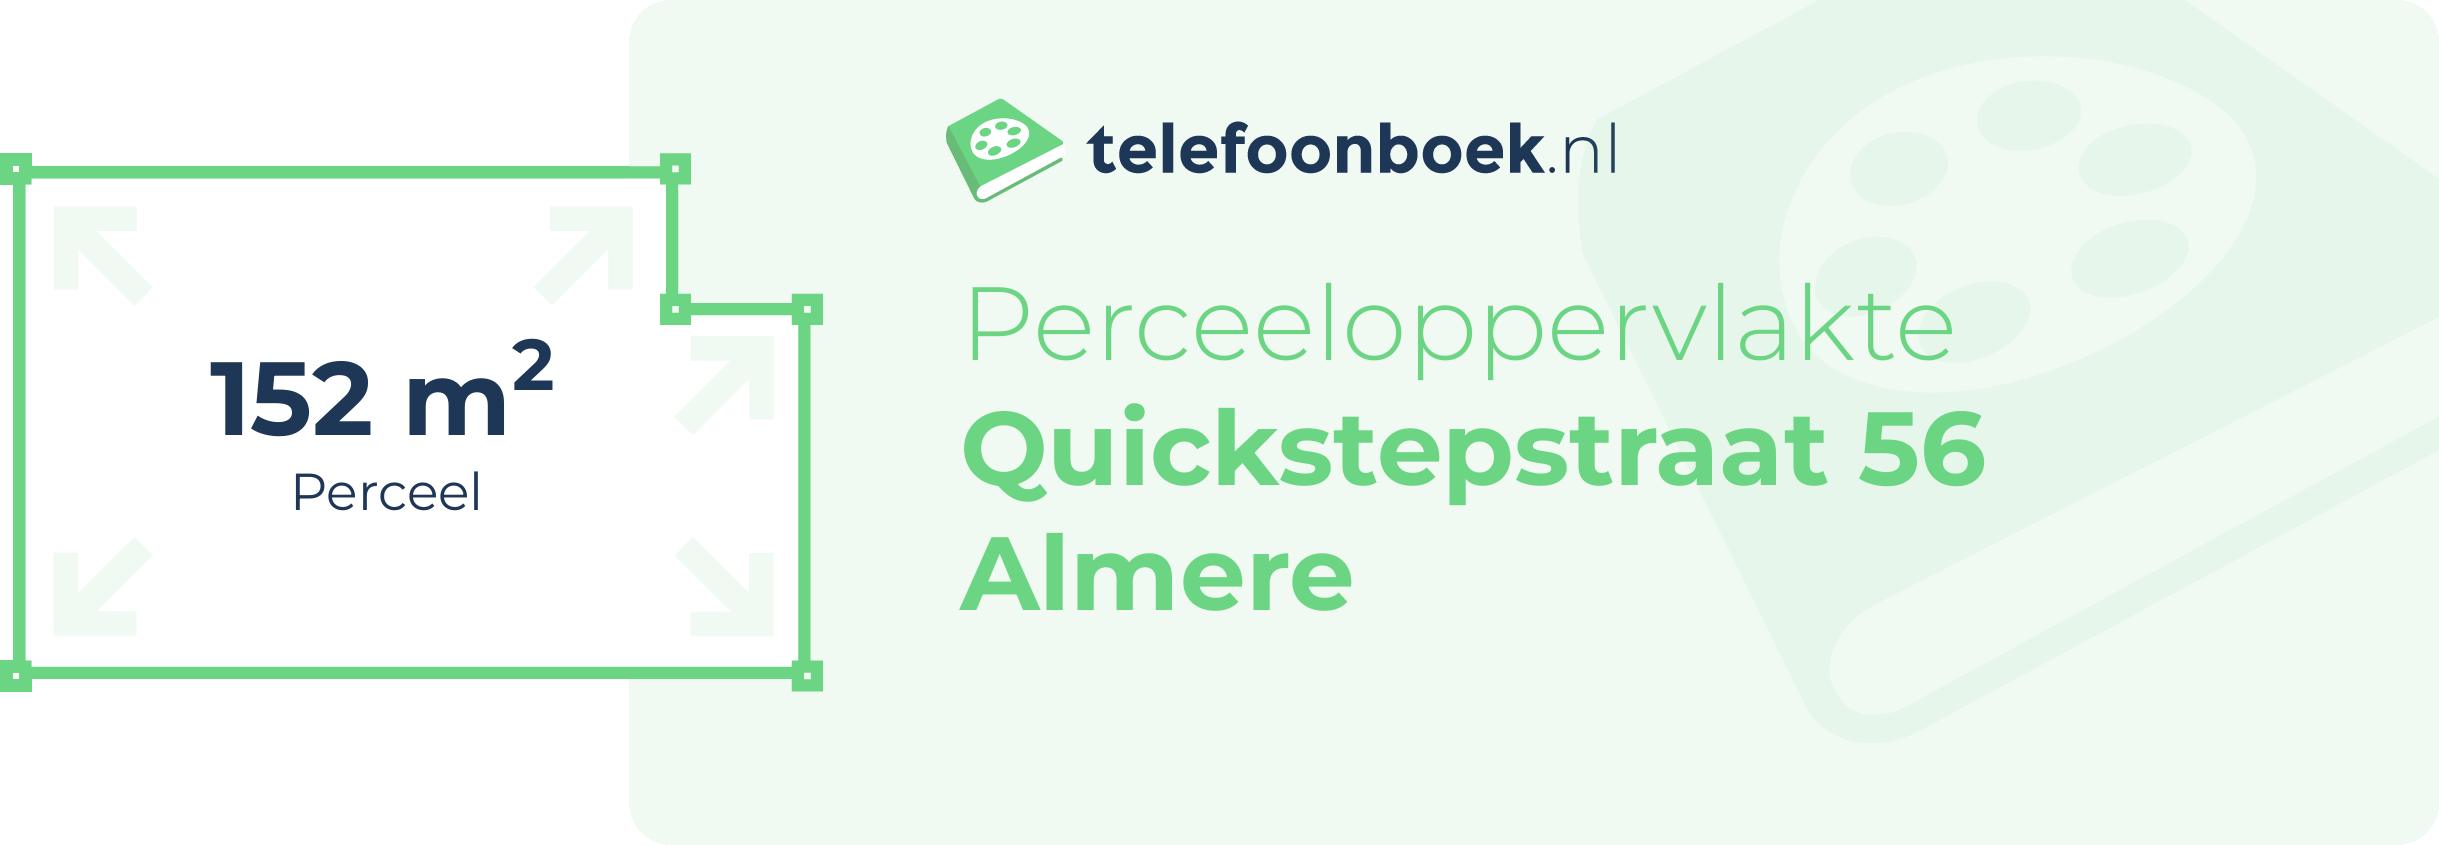 Perceeloppervlakte Quickstepstraat 56 Almere